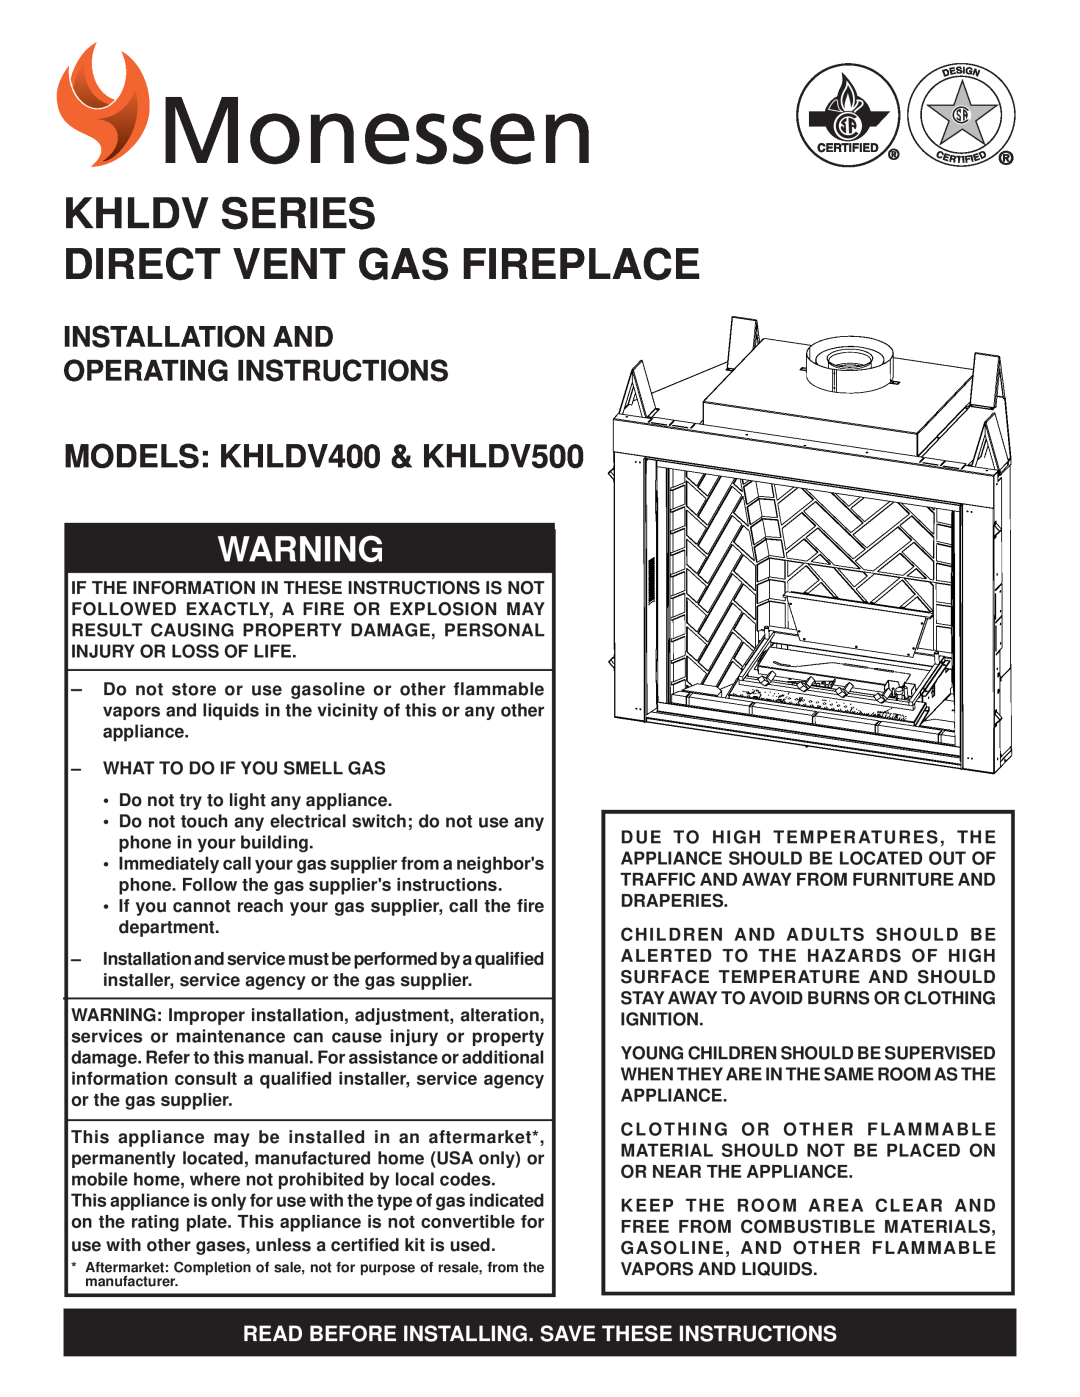 Monessen Hearth KHLDV SERIES manual MODELS KHLDV400 & KHLDV500, Khldv Series Direct Vent Gas Fireplace 